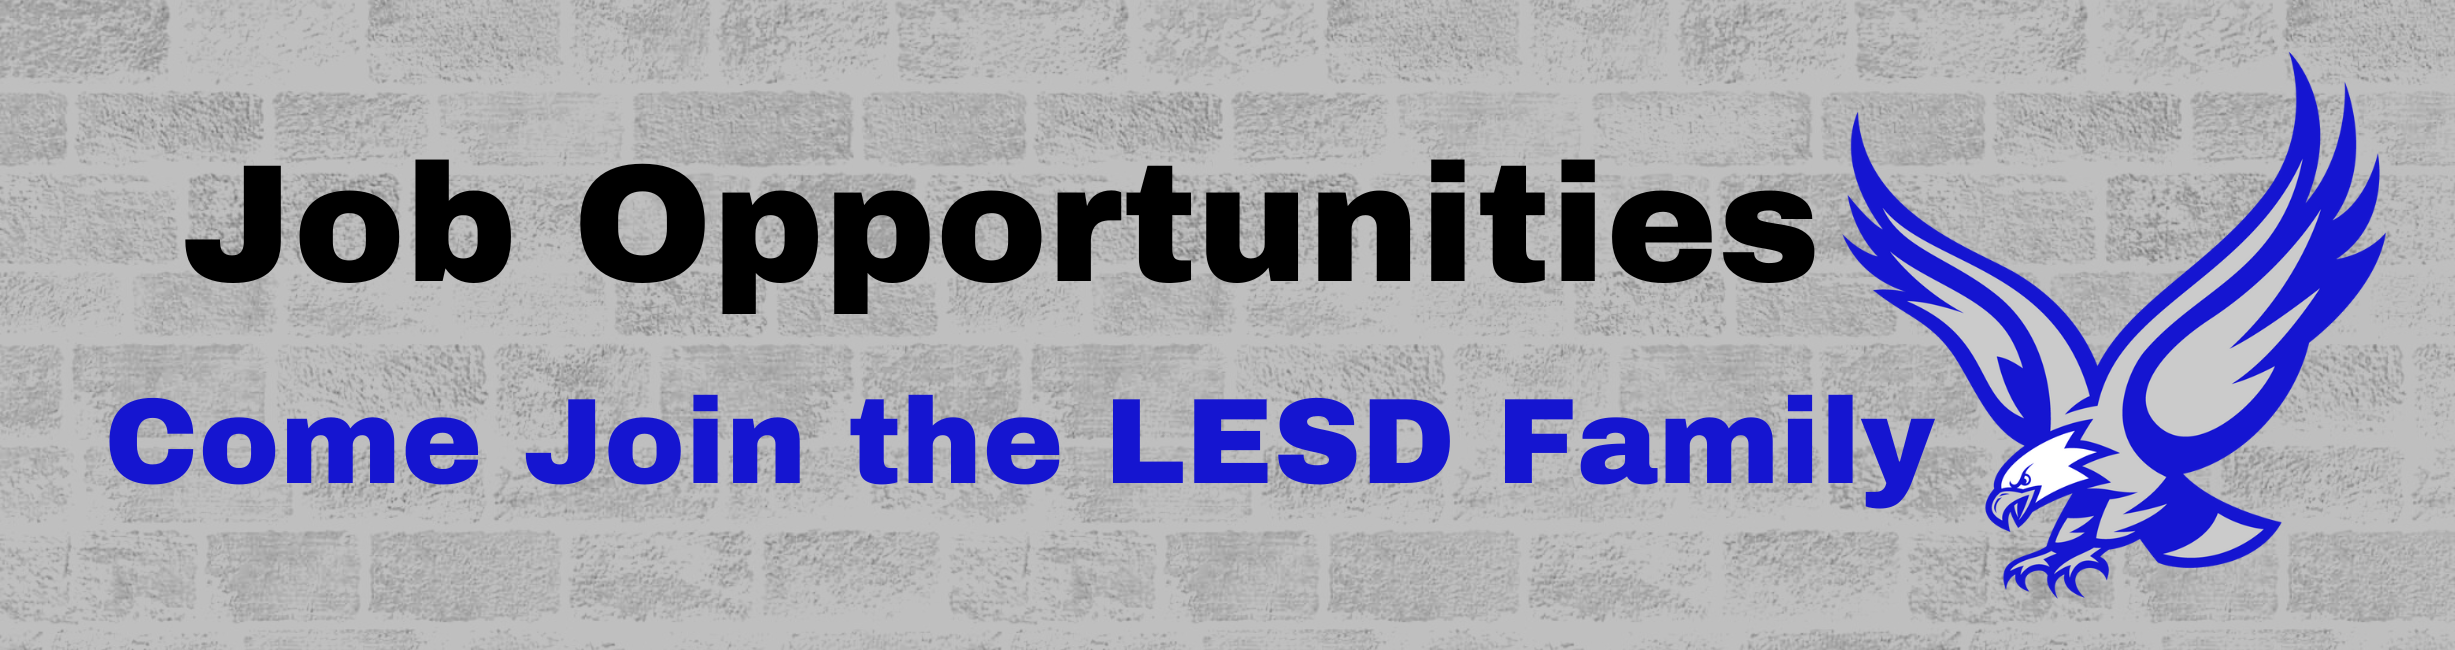 job opportunities - join the LESD Family